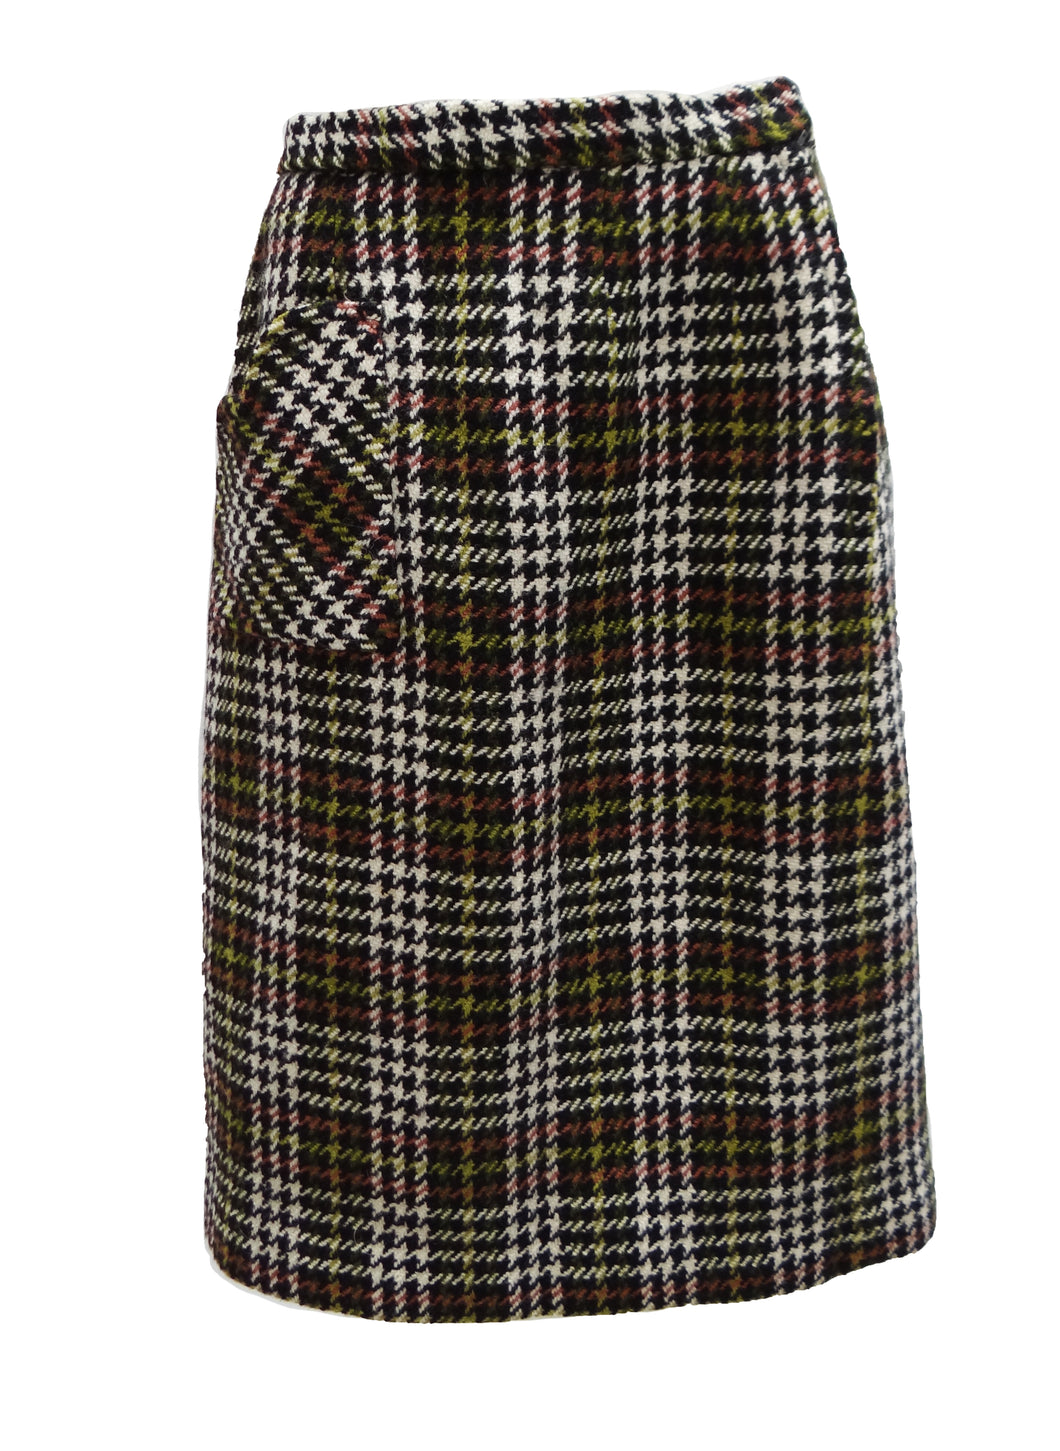 Vintage Tweed Skirt with Heart-Shaped pocket, UK10